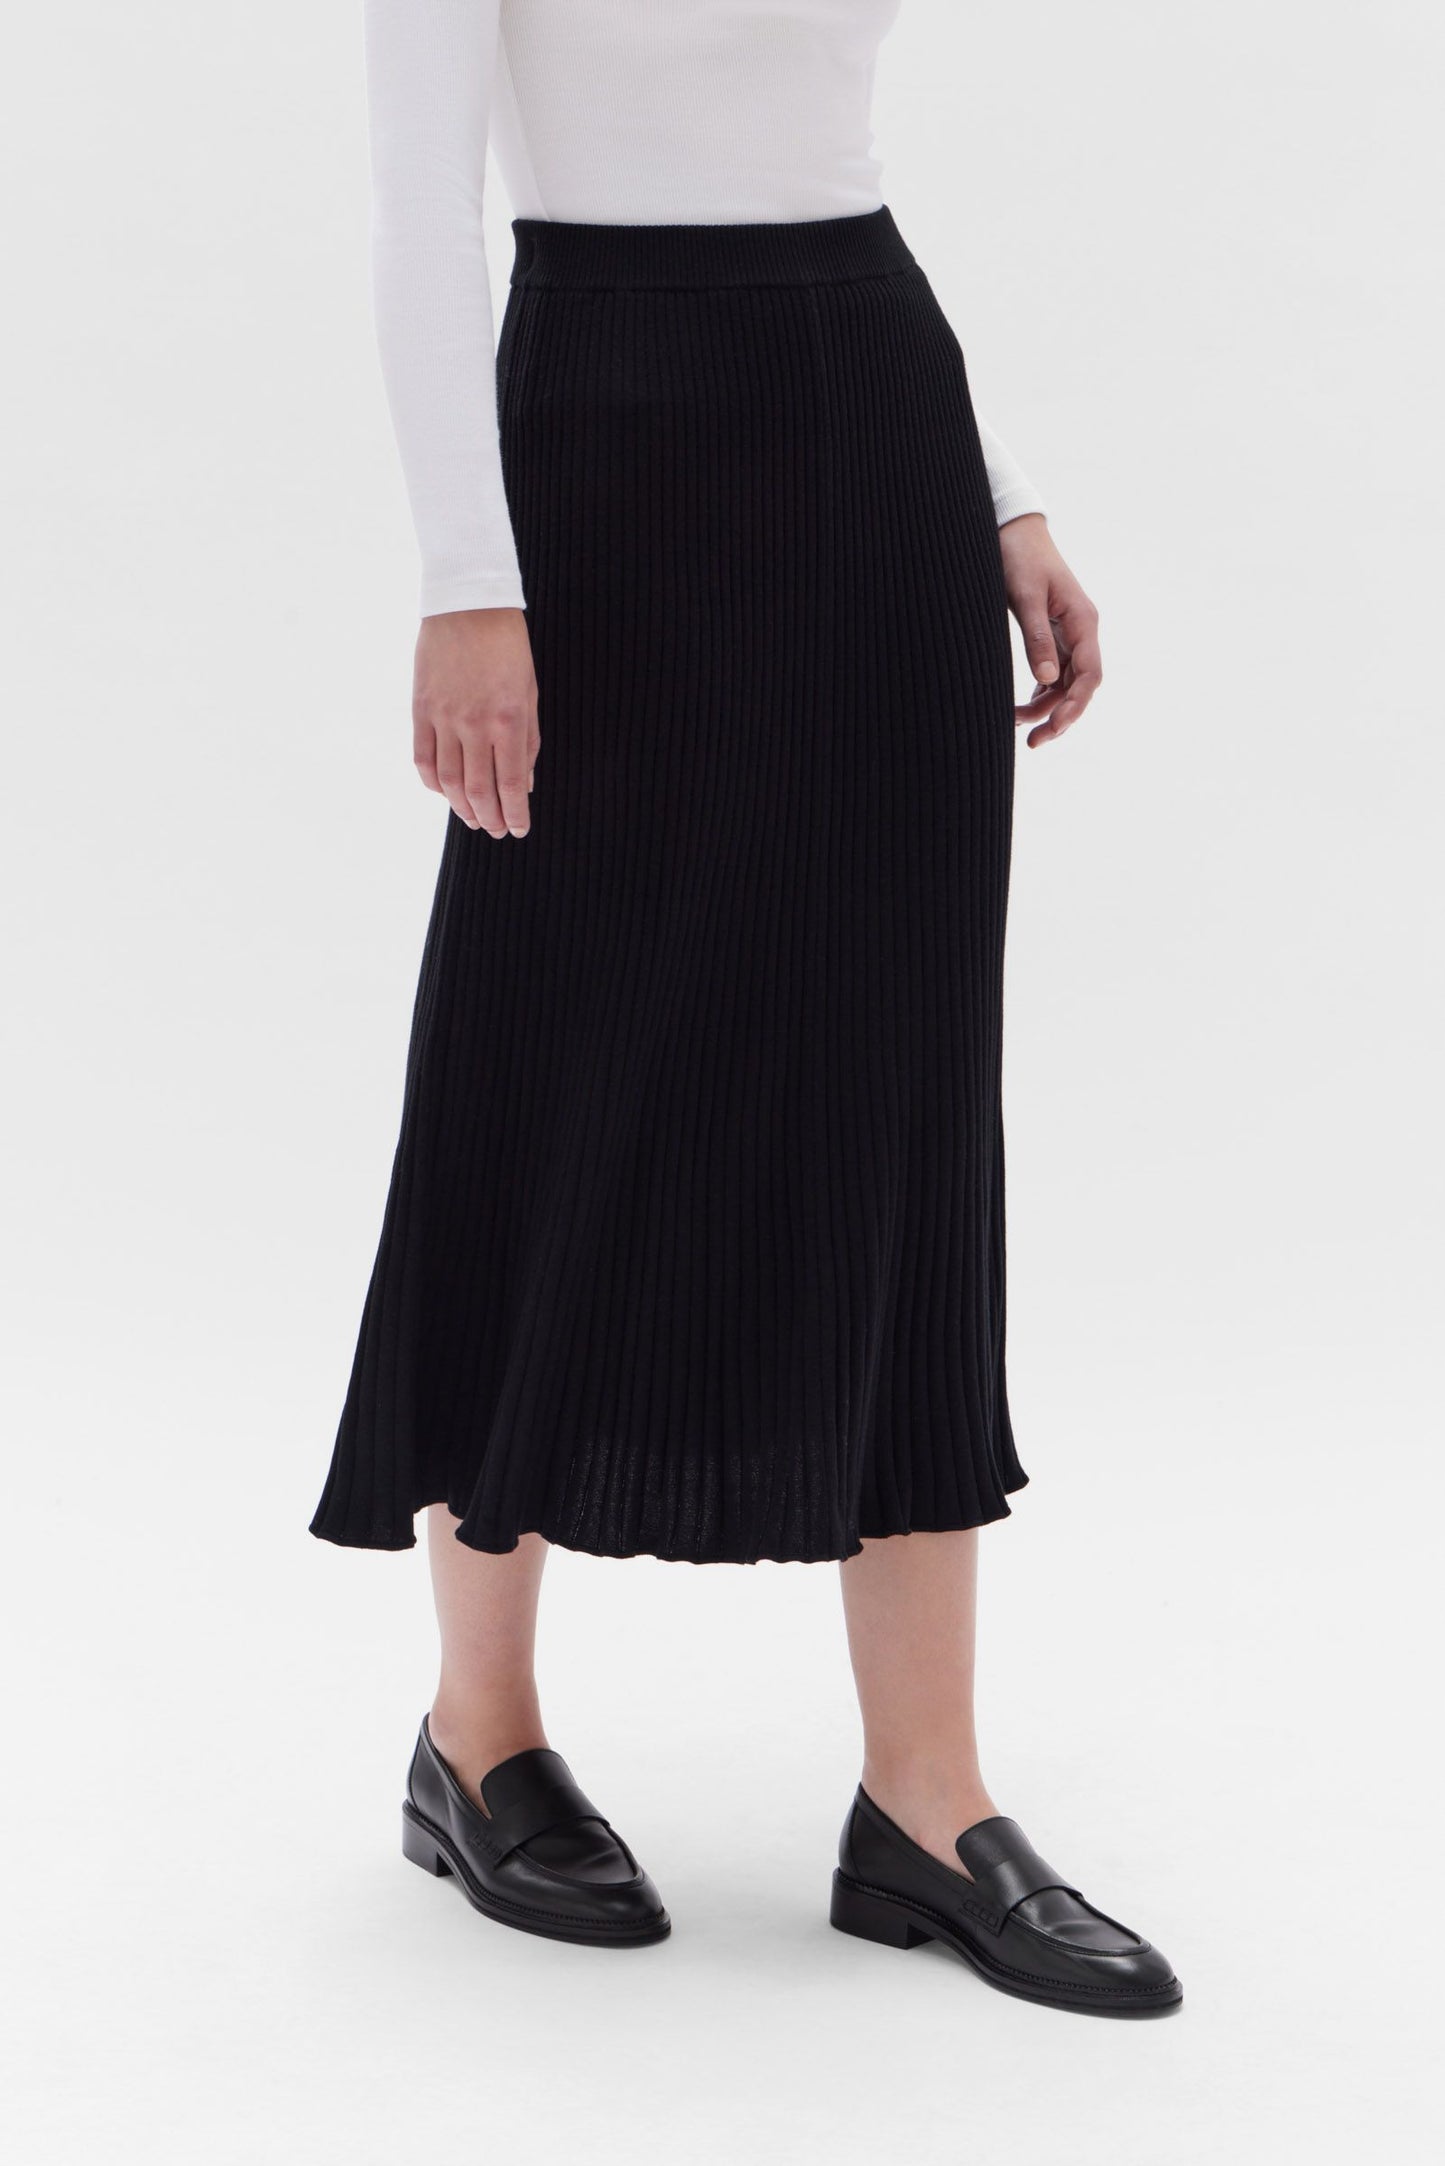 Freya Knit Skirt - Black